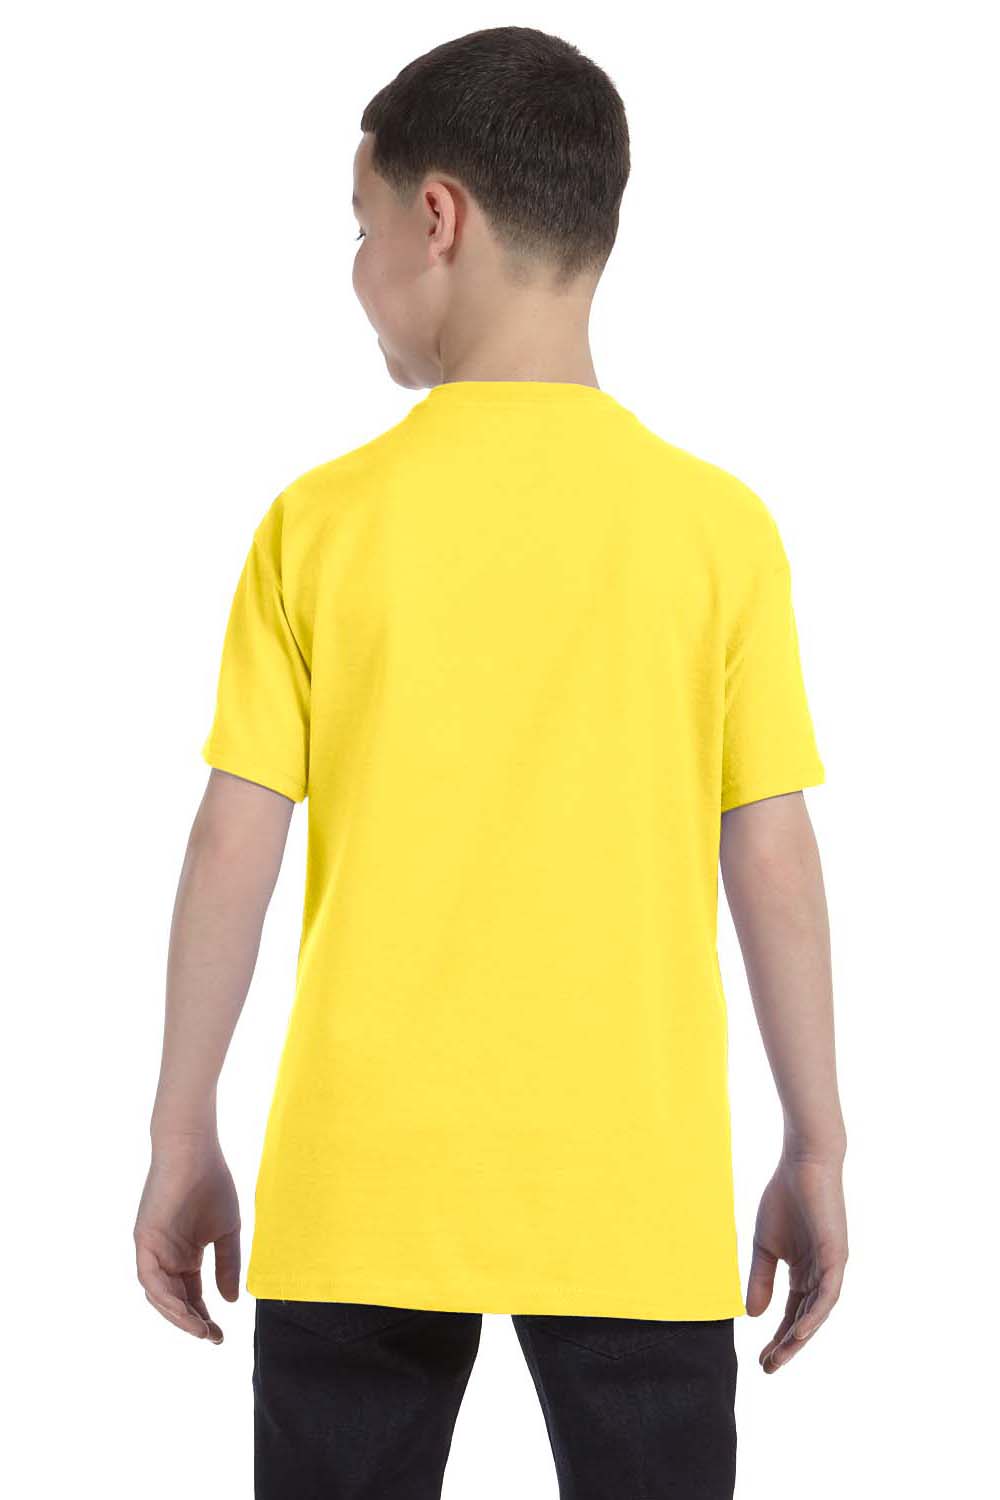 Hanes 54500 Youth ComfortSoft Short Sleeve Crewneck T-Shirt Yellow Back